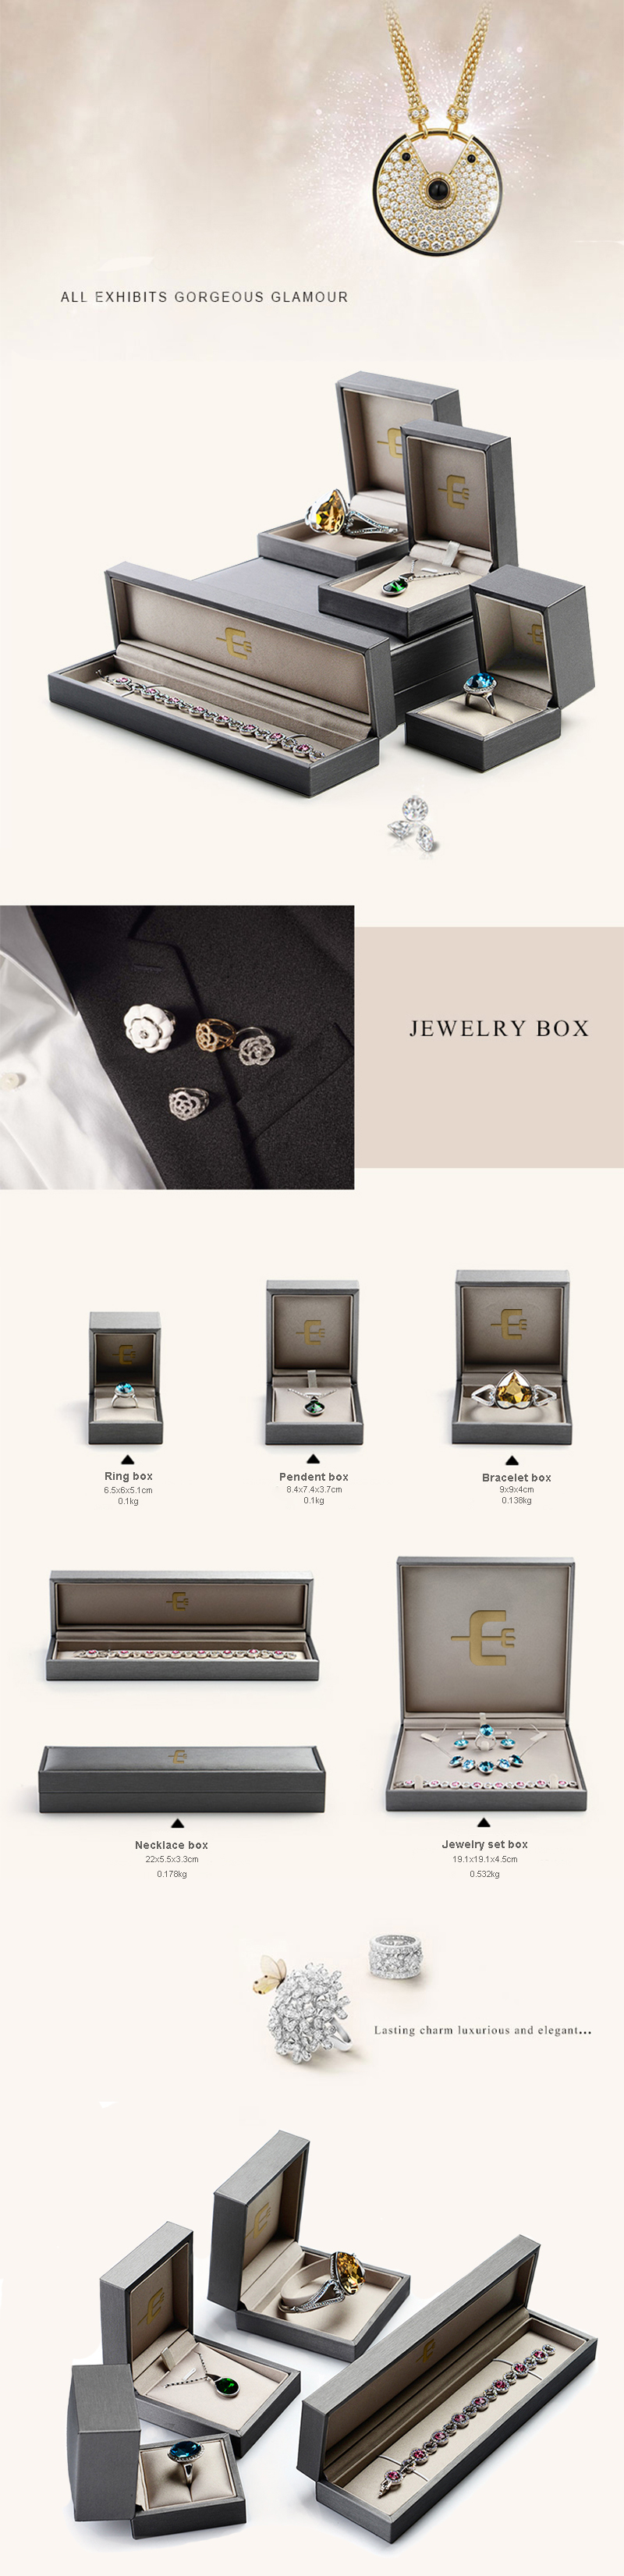 Ring box wholesale